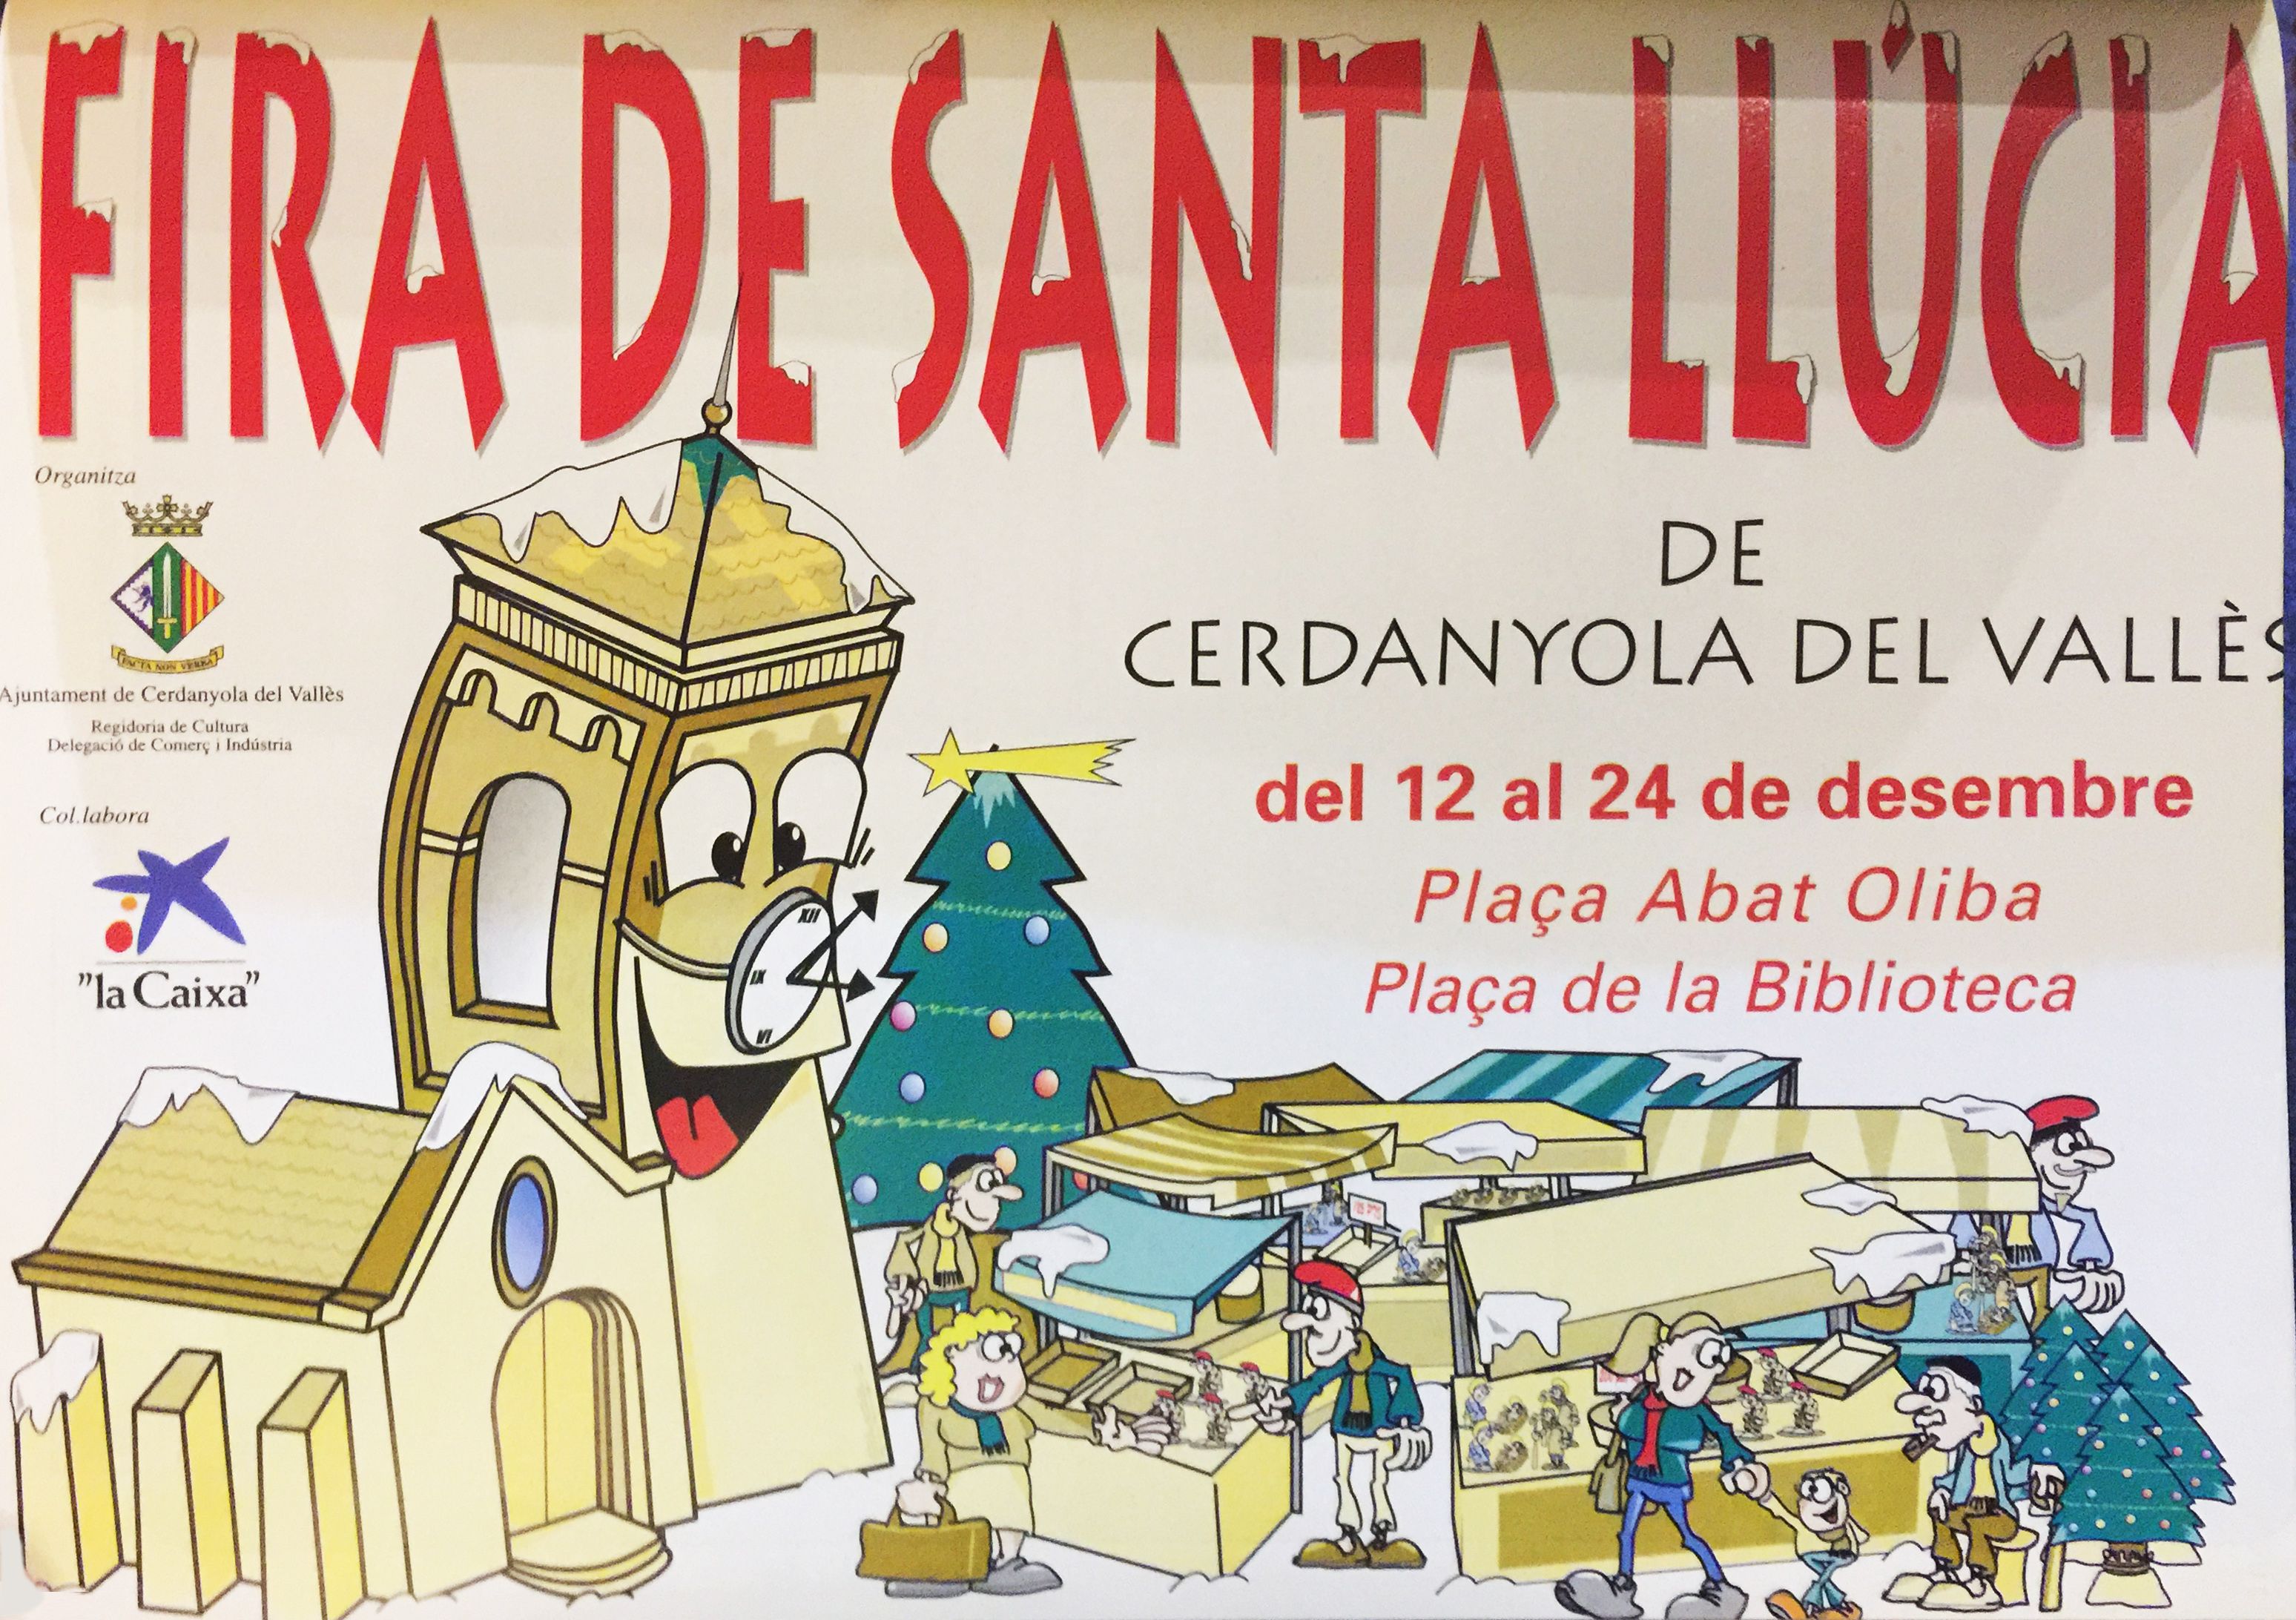 Cartell de la Fira de Santa Llúcia a Cerdanyola (1997)